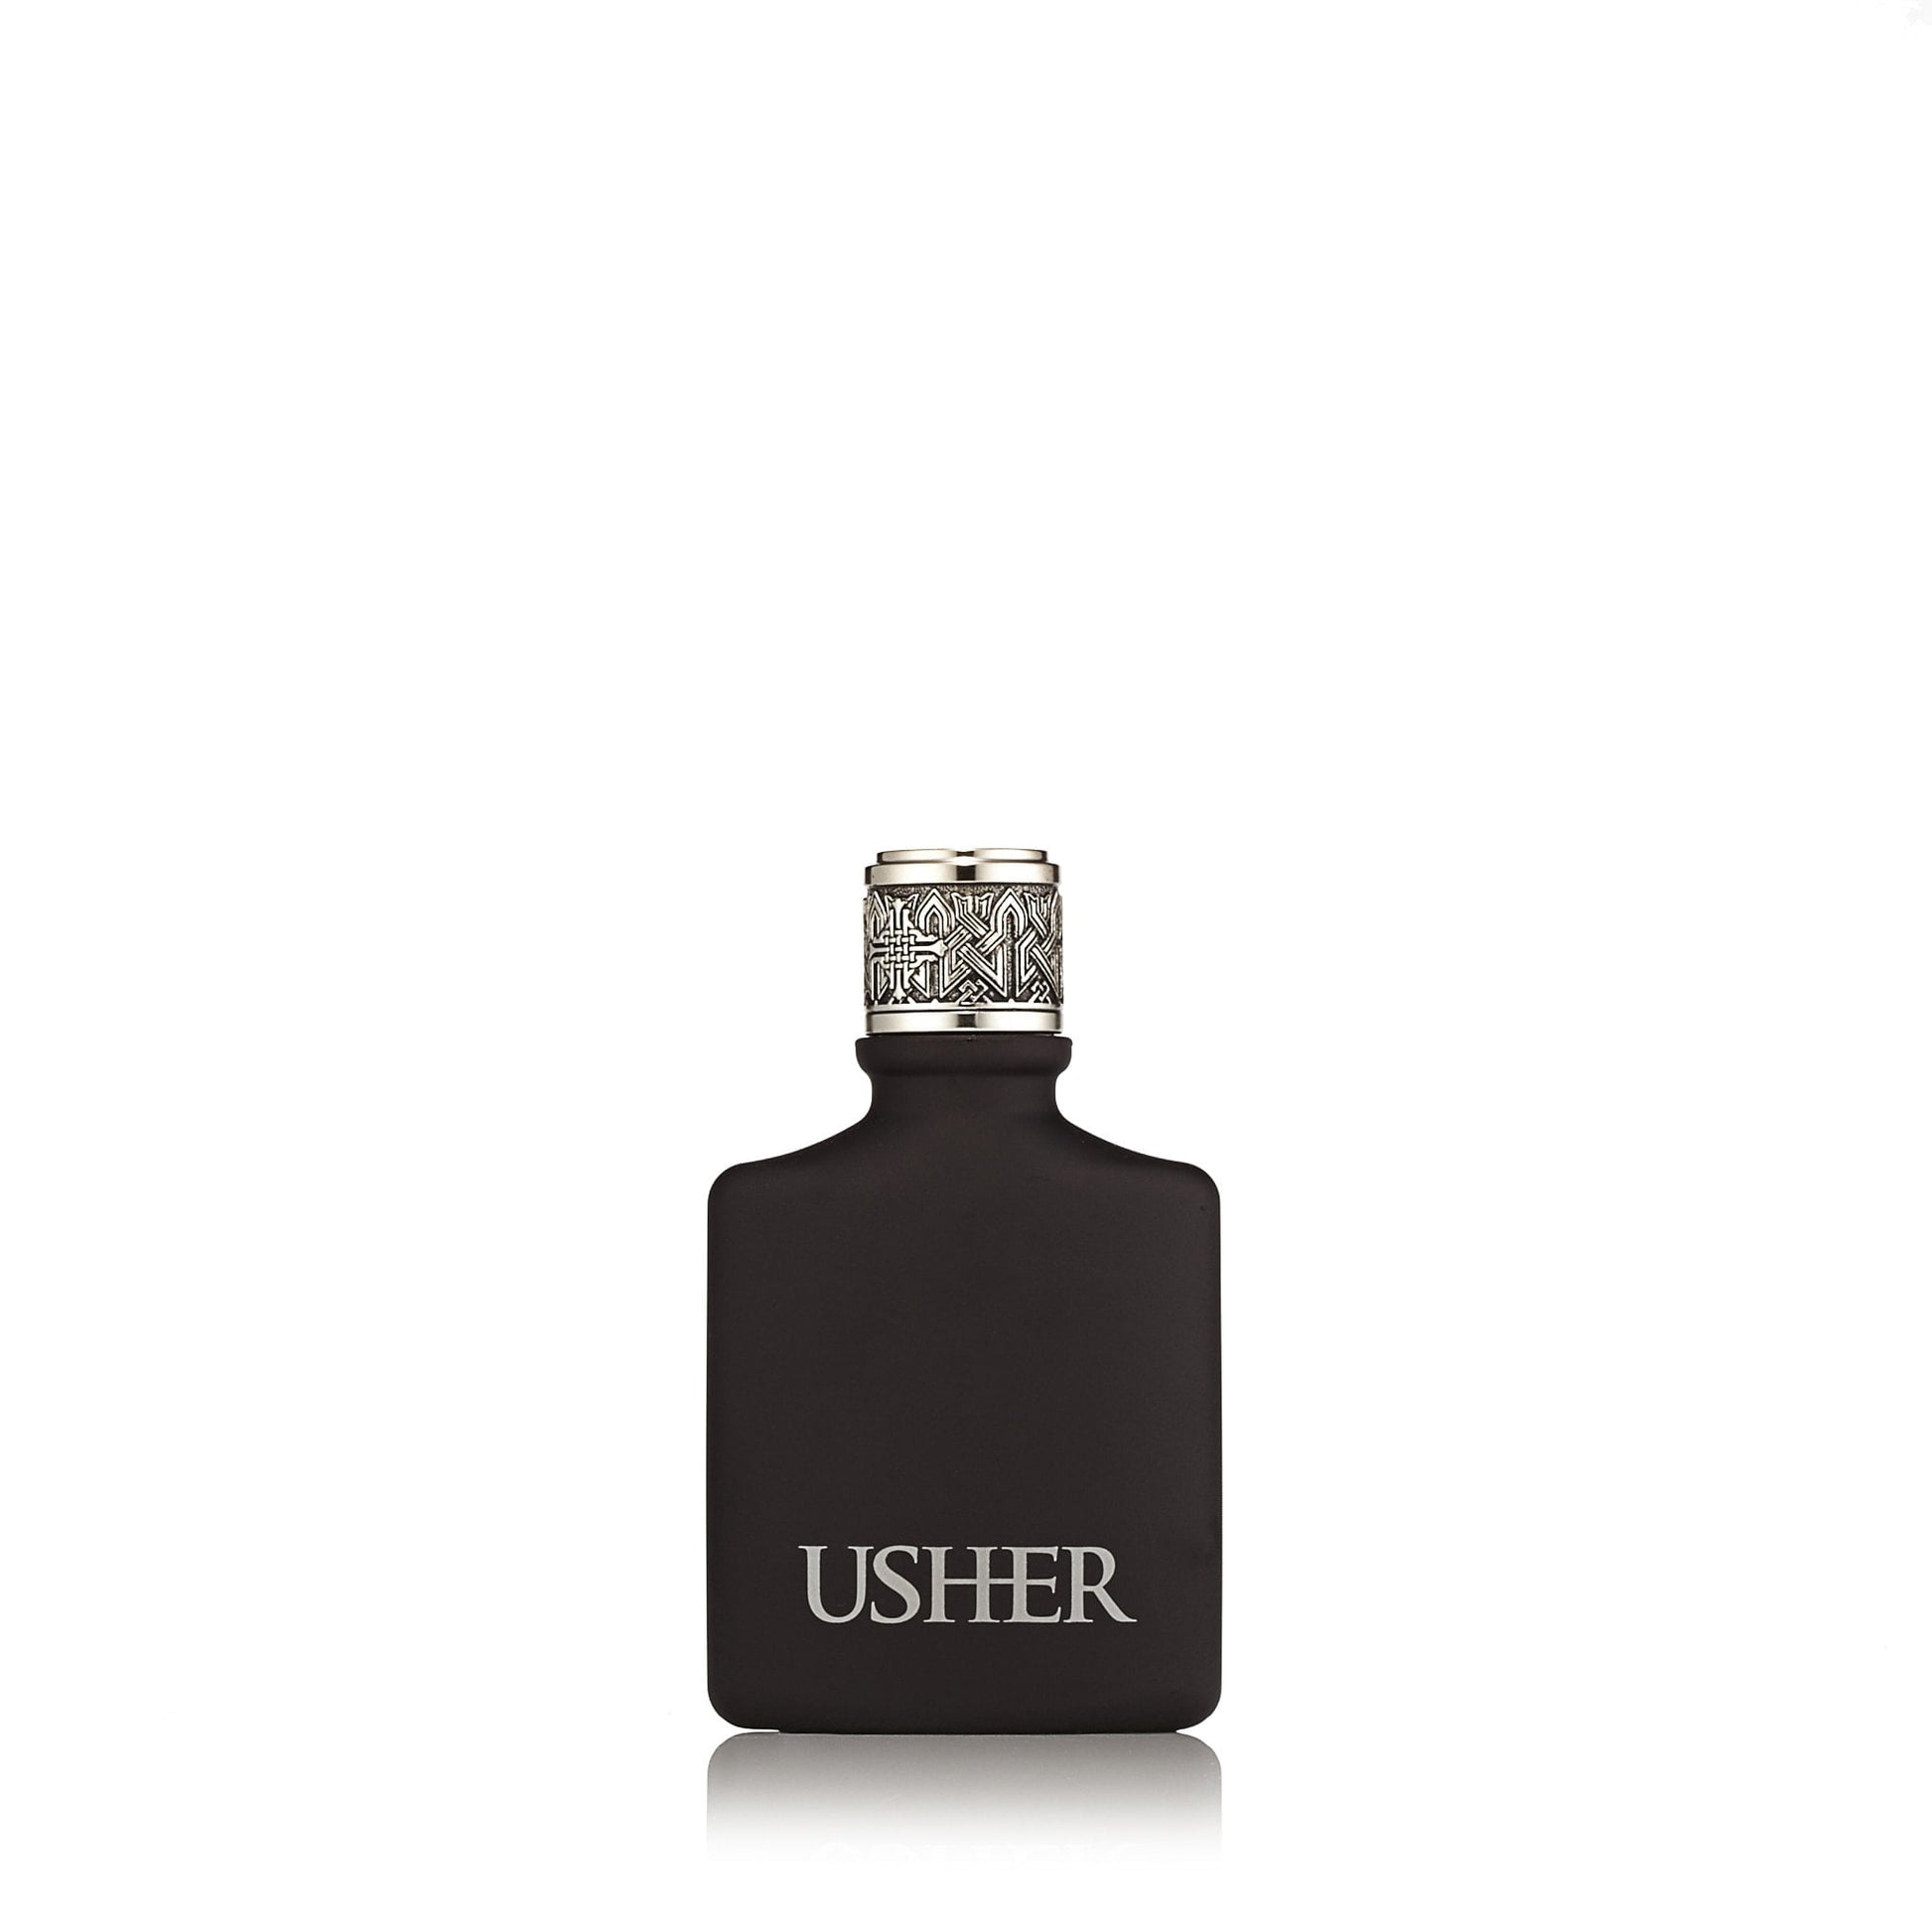 Usher Eau de Toilette Spray for Men by Usher, Product image 1